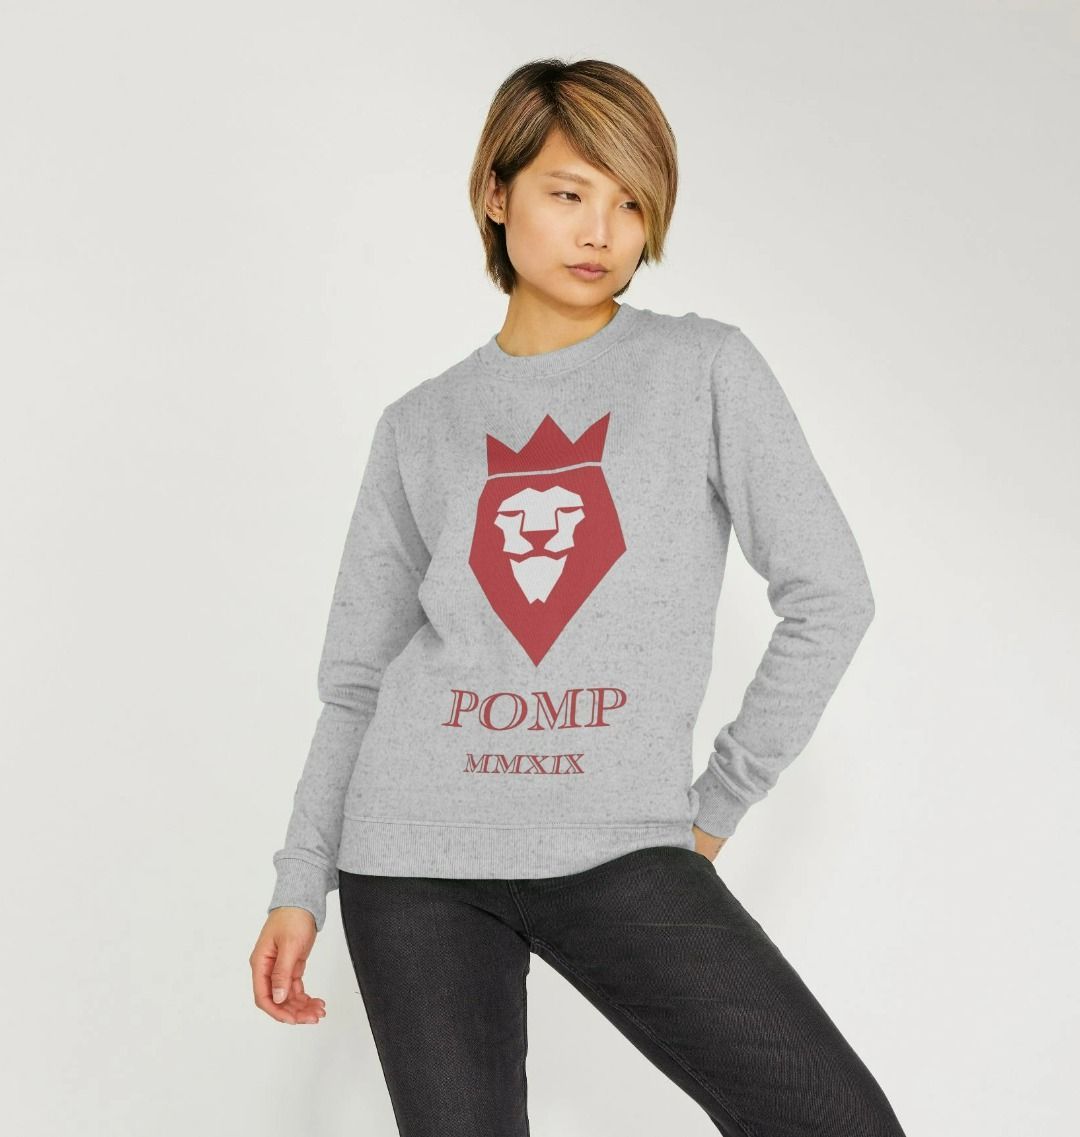 Women's POMP MMXIX circular sweatshirt